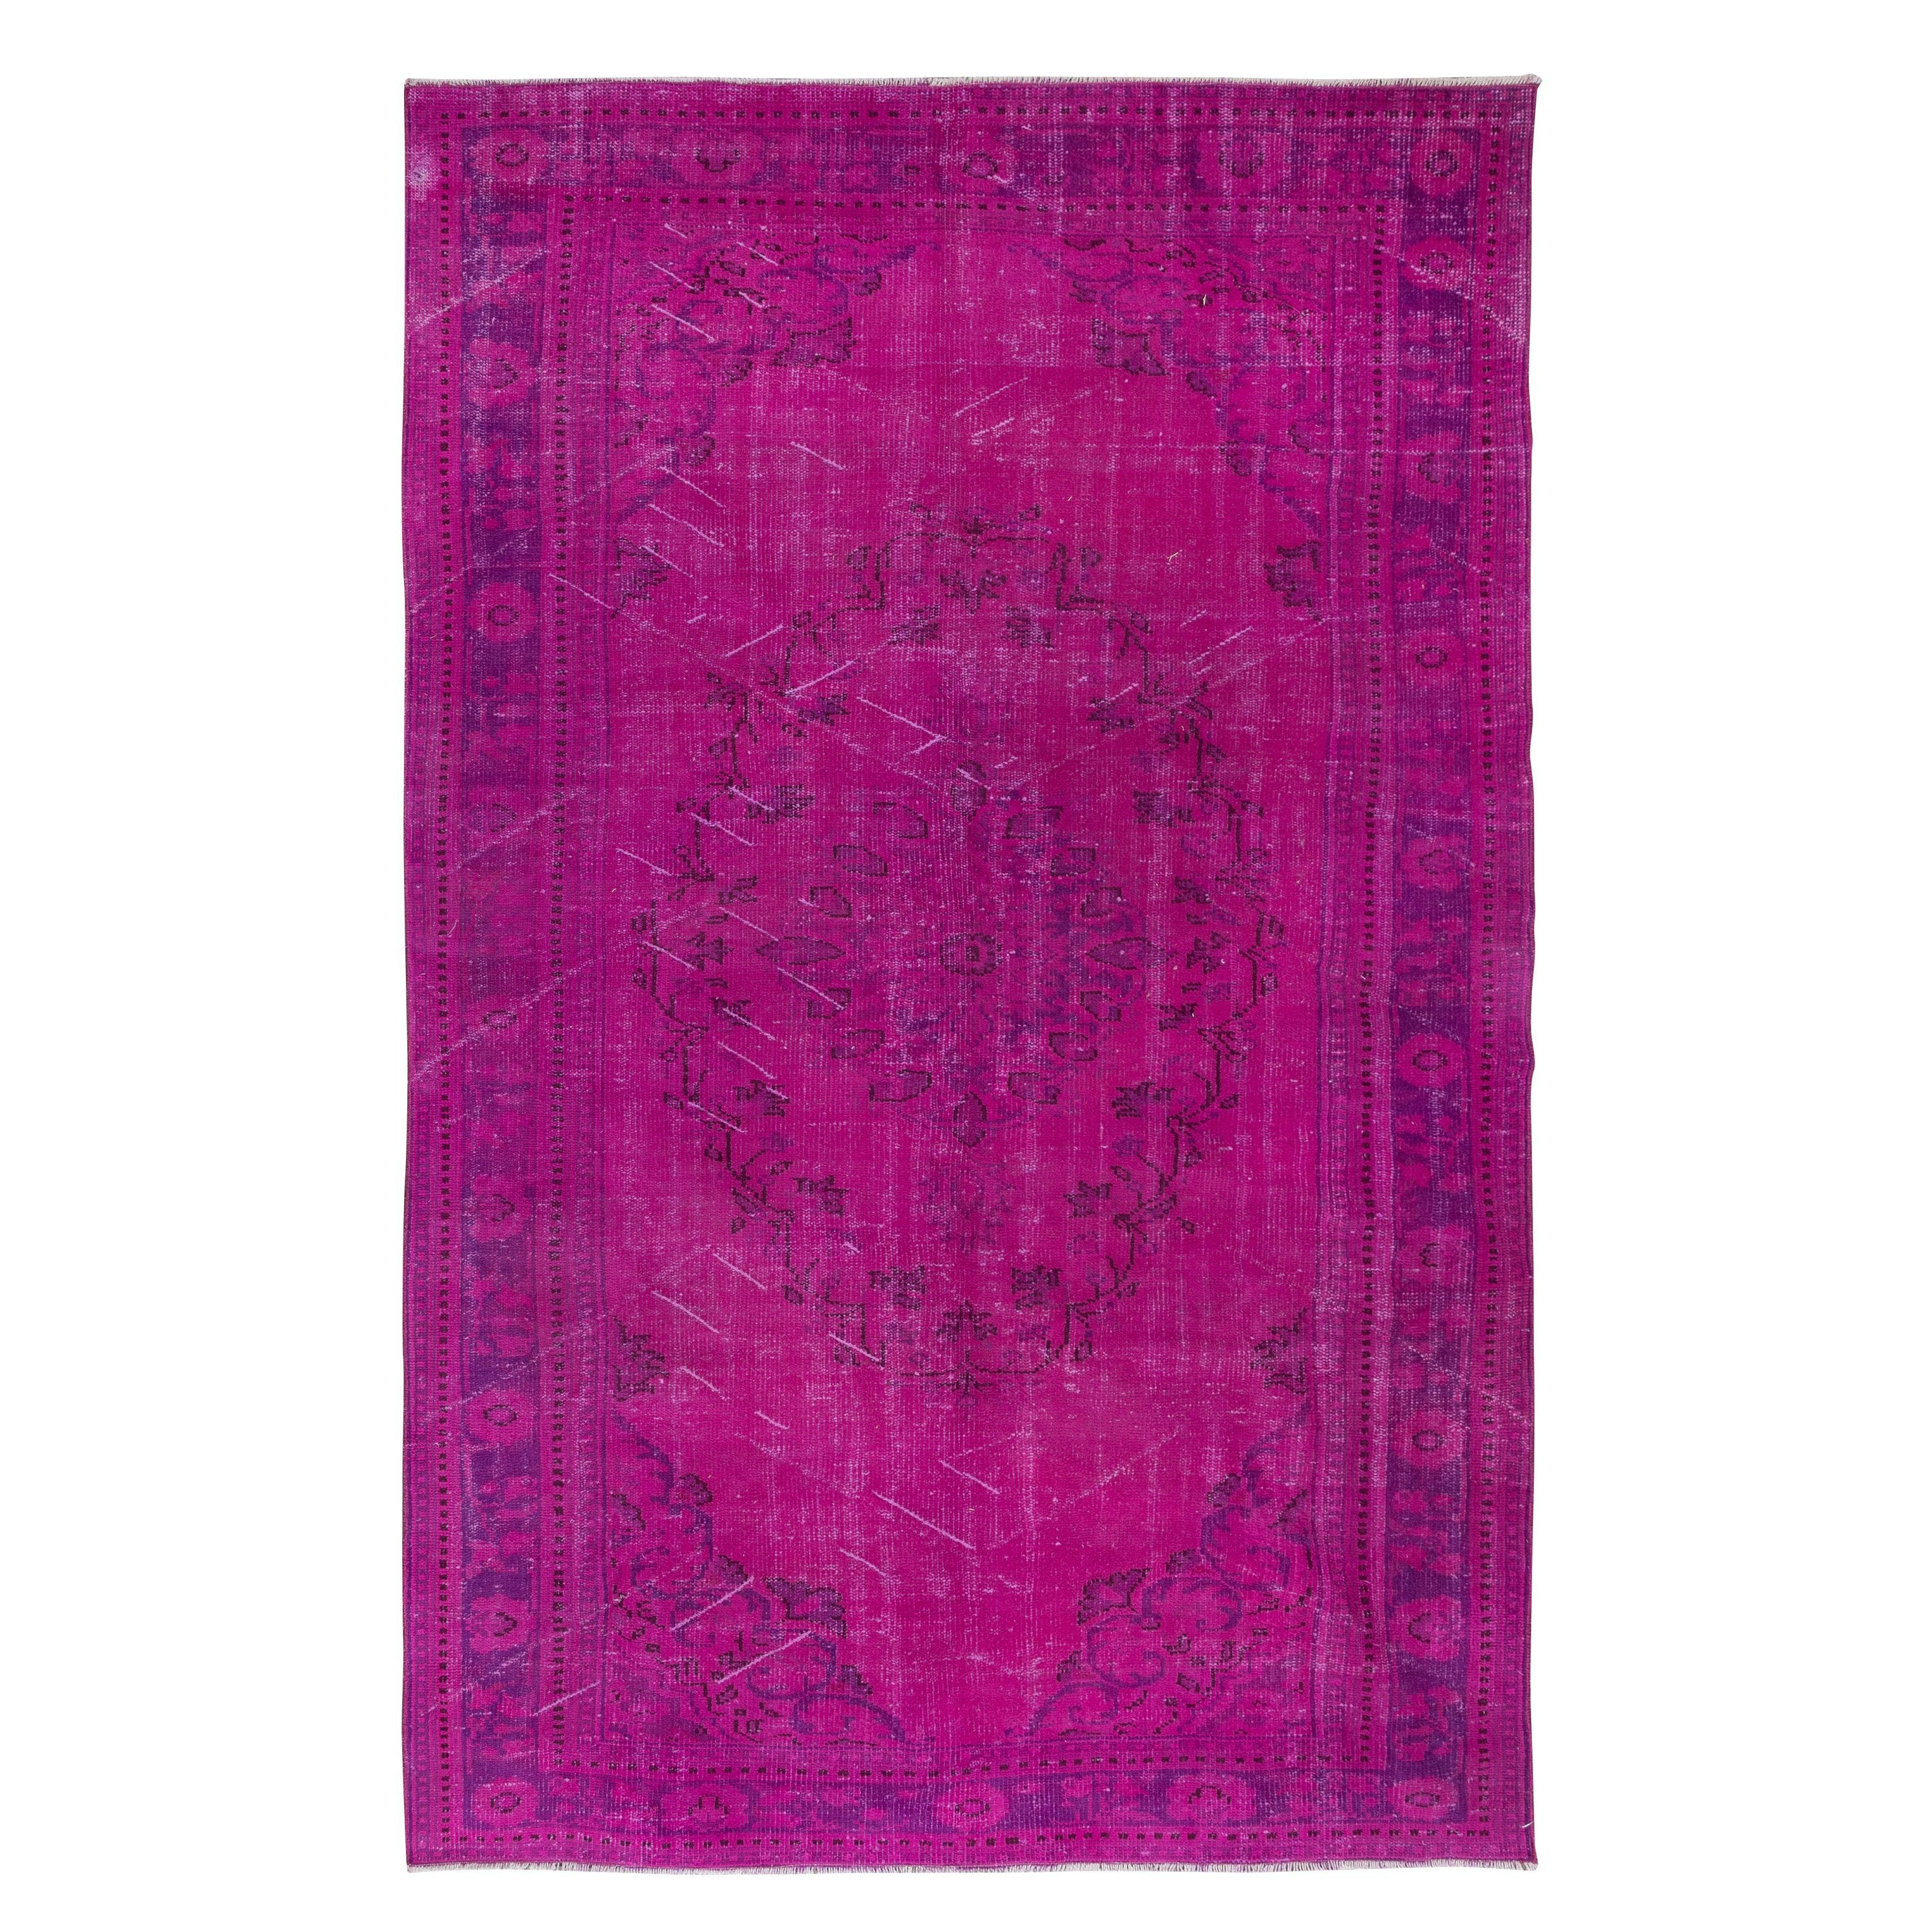 6.3x10 Ft Contemporary Area Rug in Pink & Light Purple, Handmade Turkish Carpet